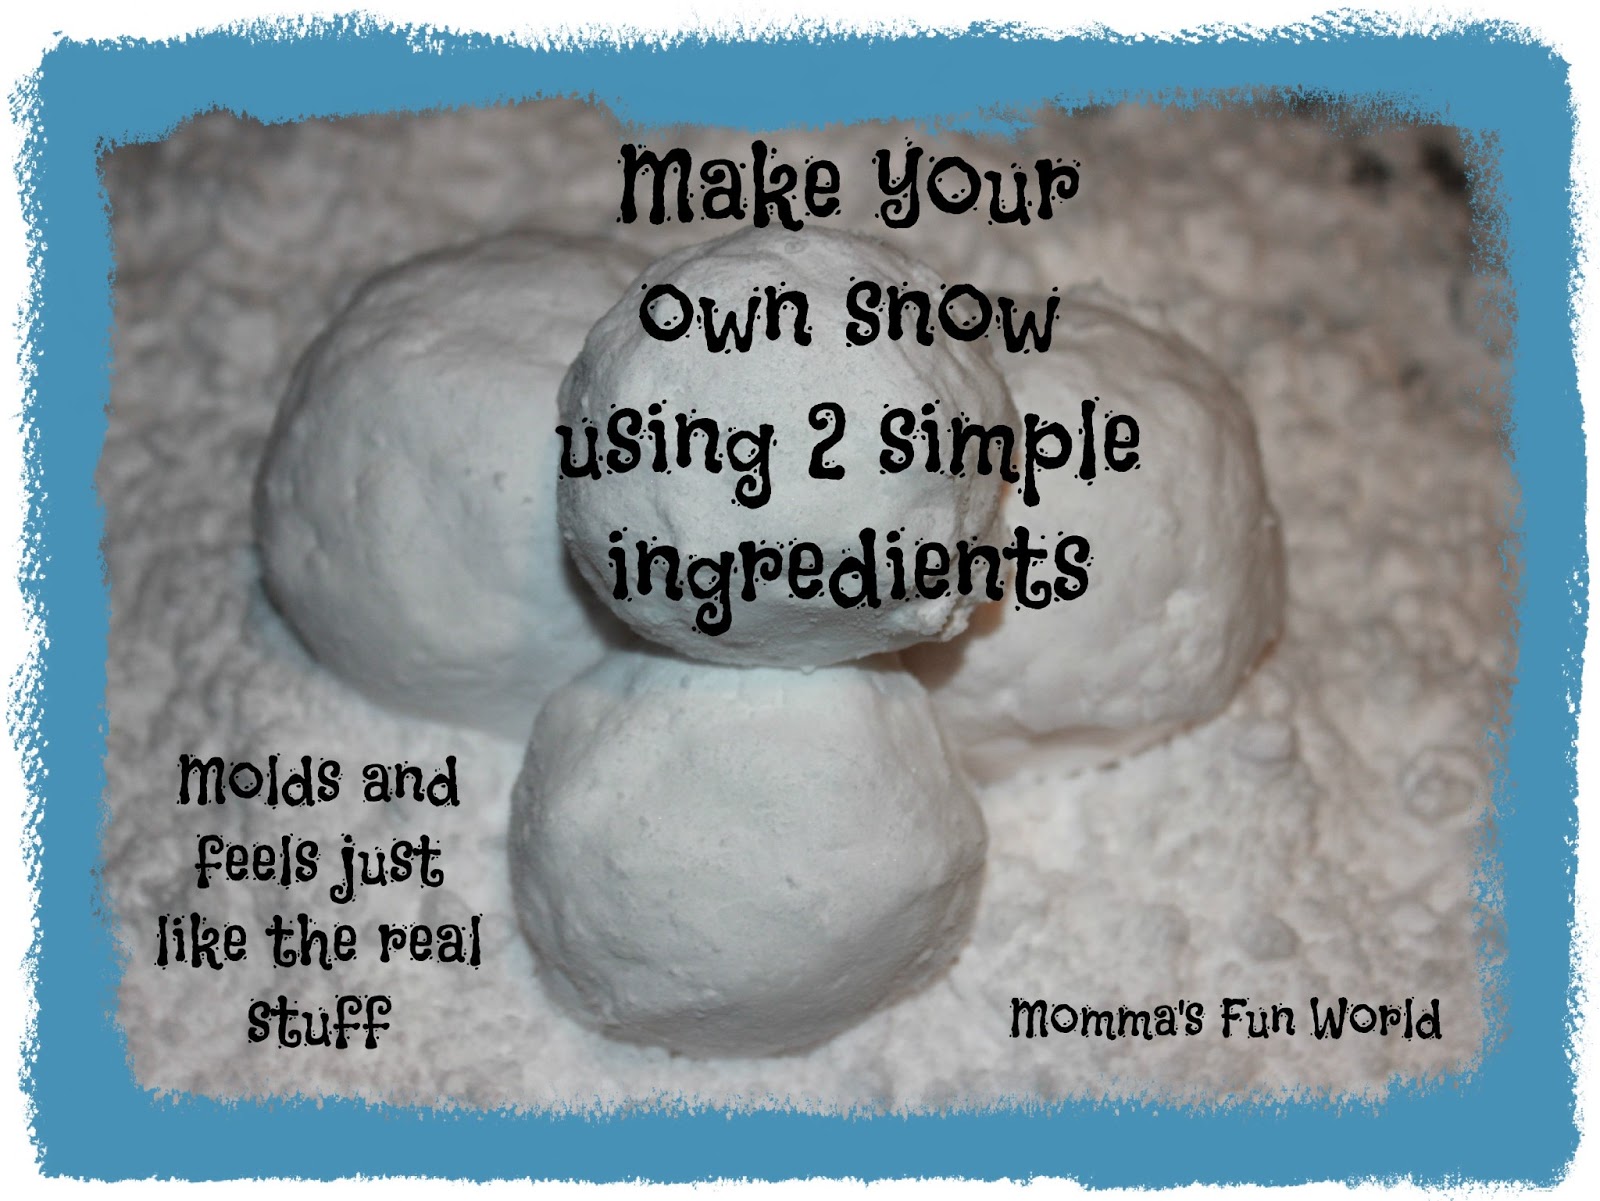 How to Make Fake Snow  Fun and Easy Fake Snow Recipe